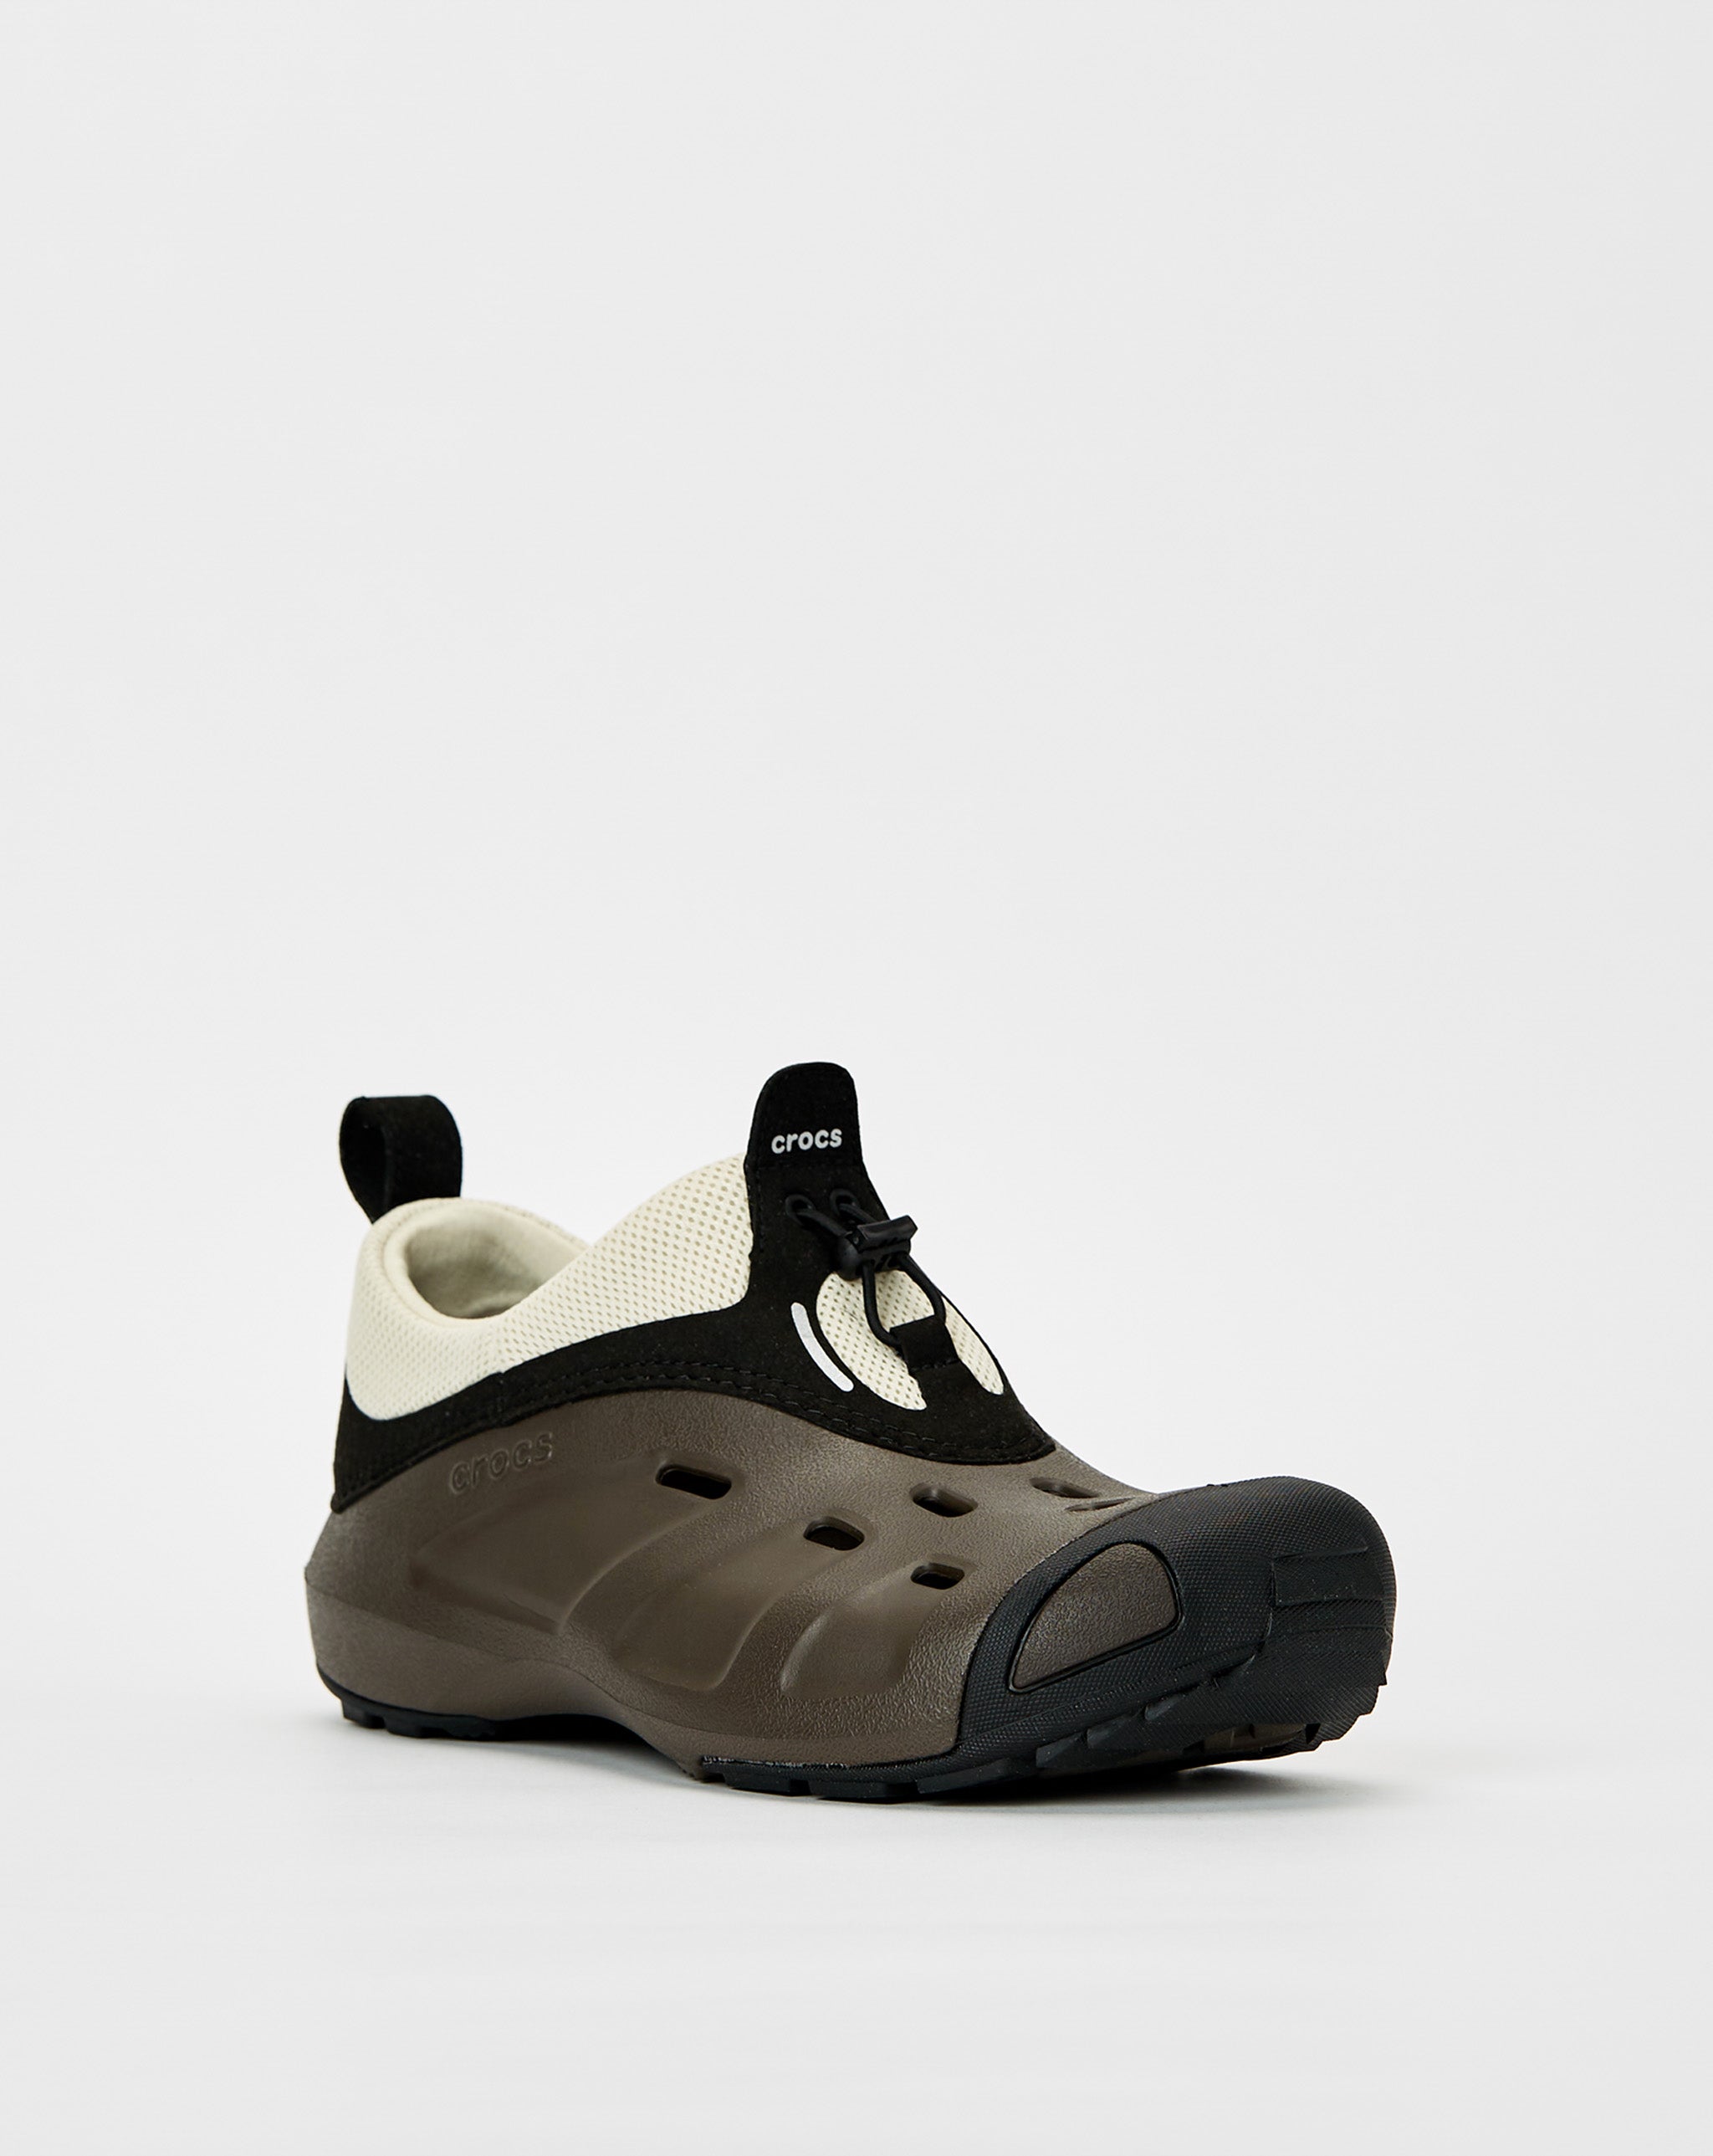 Crocs nike roshe black with white check soccer cleats  - Cheap Erlebniswelt-fliegenfischen Jordan outlet